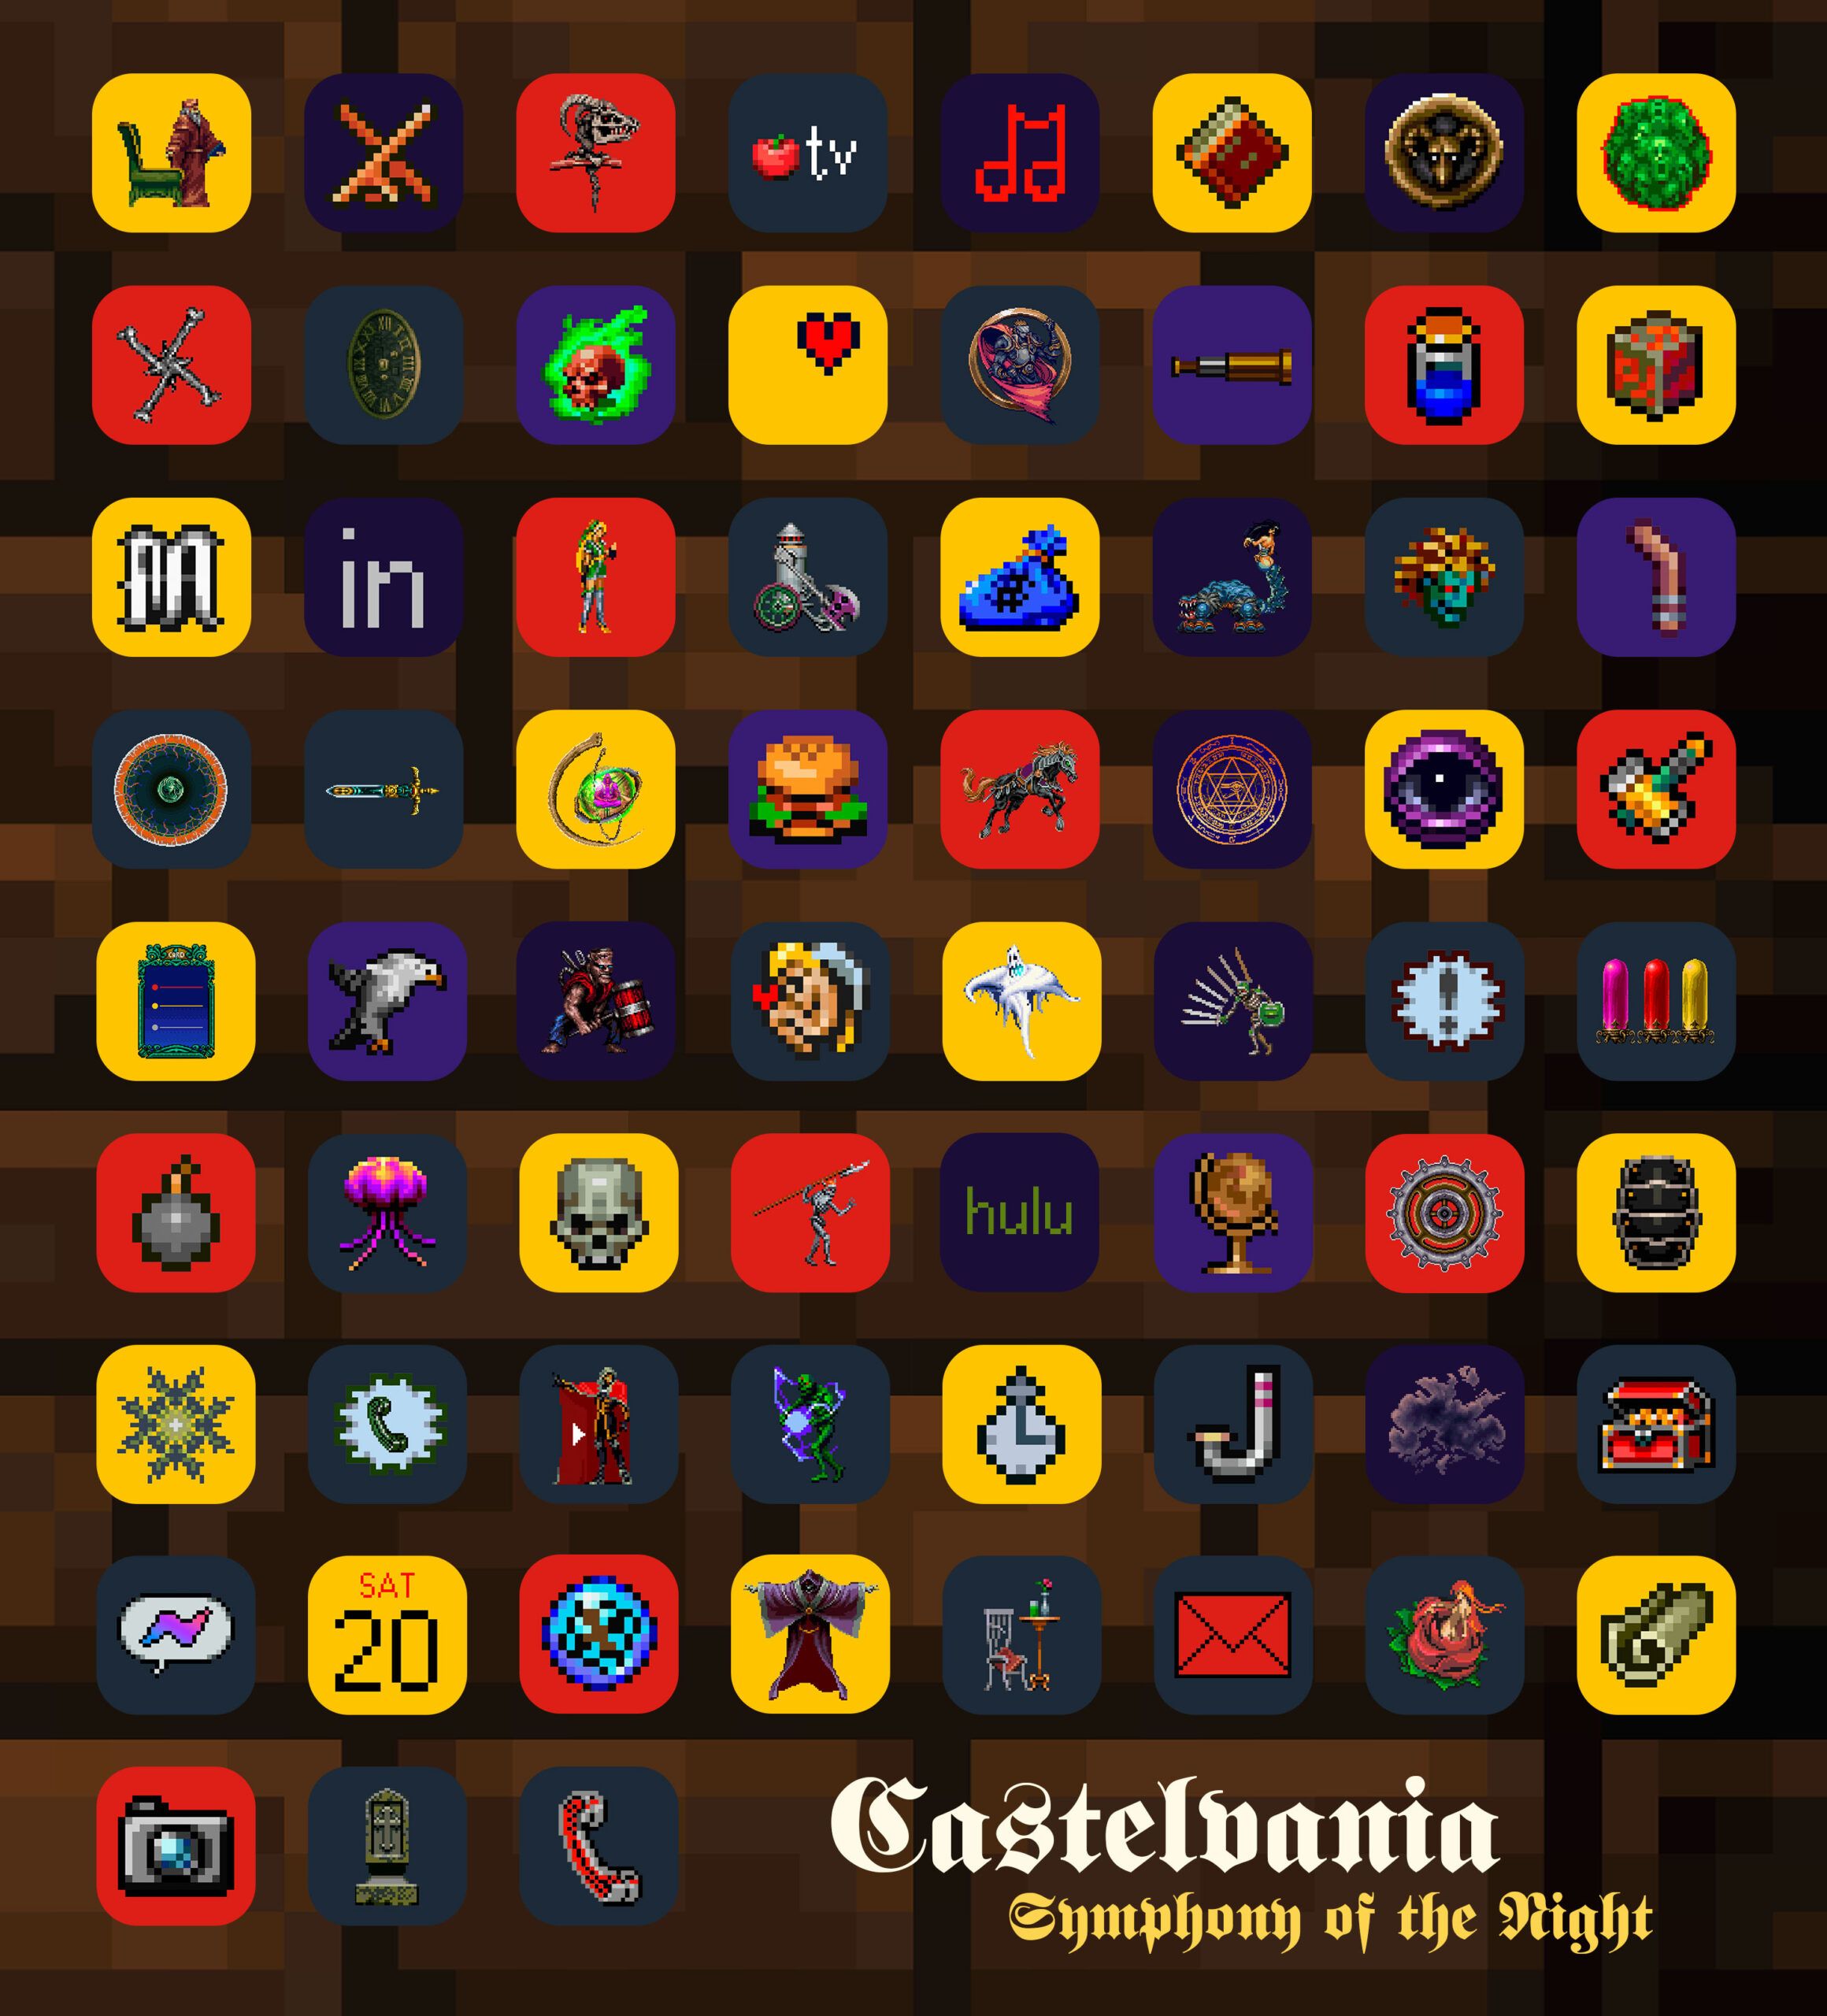  Castlevania Hintergrundbild 2320x2560. Castlevania Symphony of the Night App Icon App Icon for iOS 14